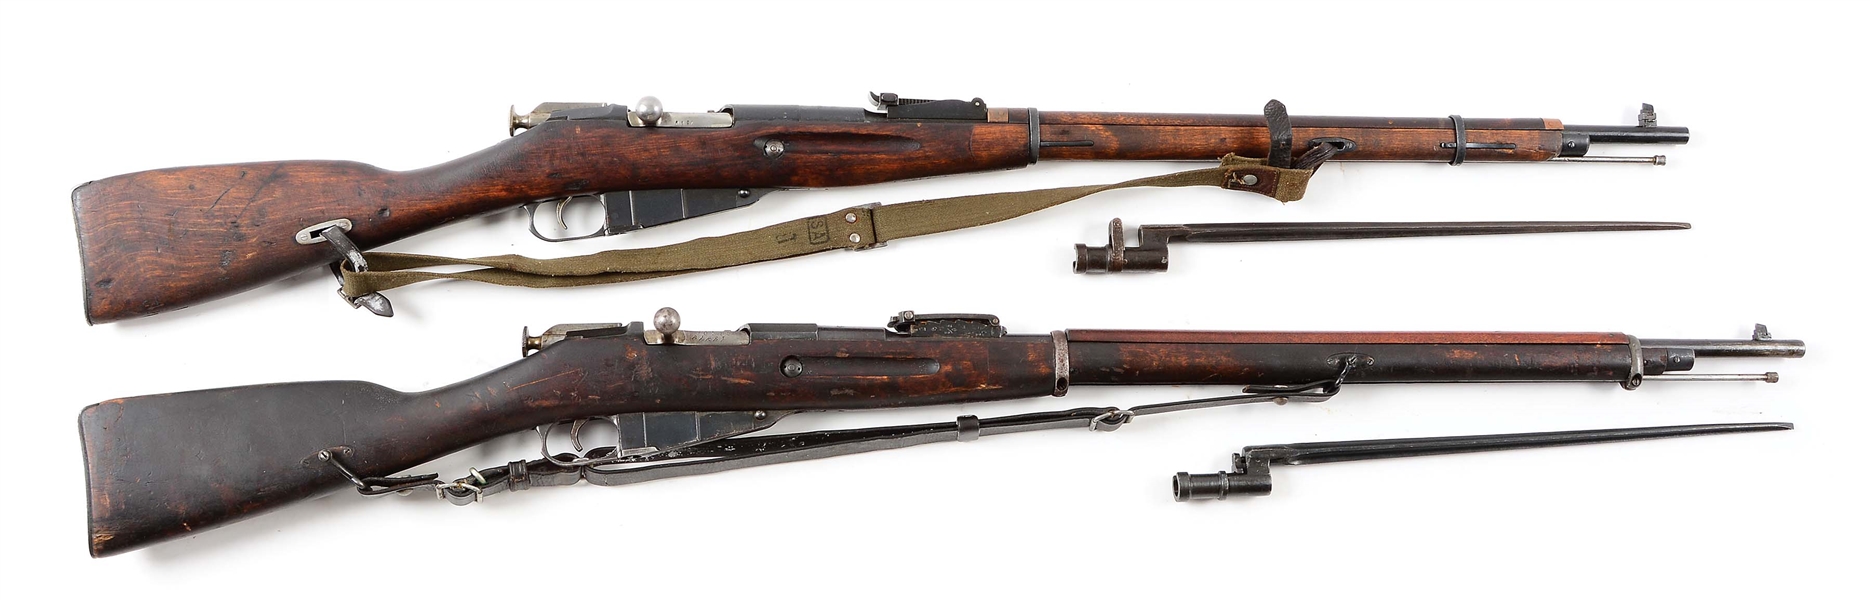 (C) LOT OF 2 FINNISH M91 MOSIN NAGANT LONG RIFLES WITH BAYONETS: 1941 91/30 RUSSIAN REWORK & 1942 TIKKA M91.